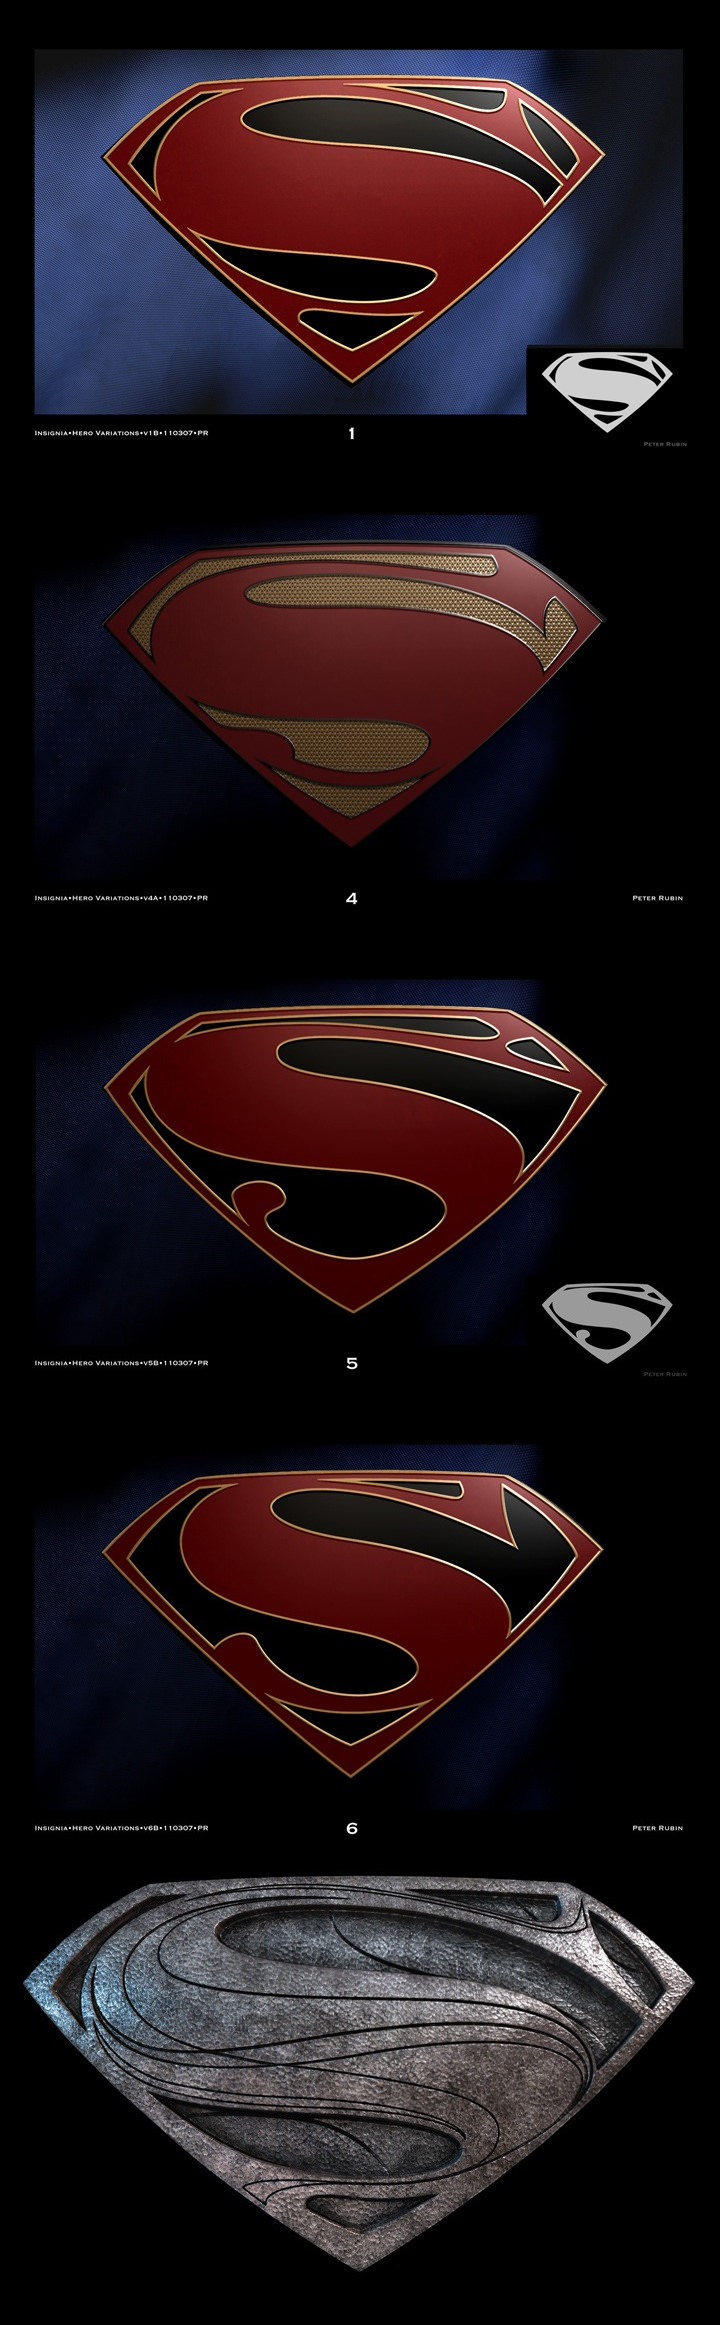 S do Superman - conceitos